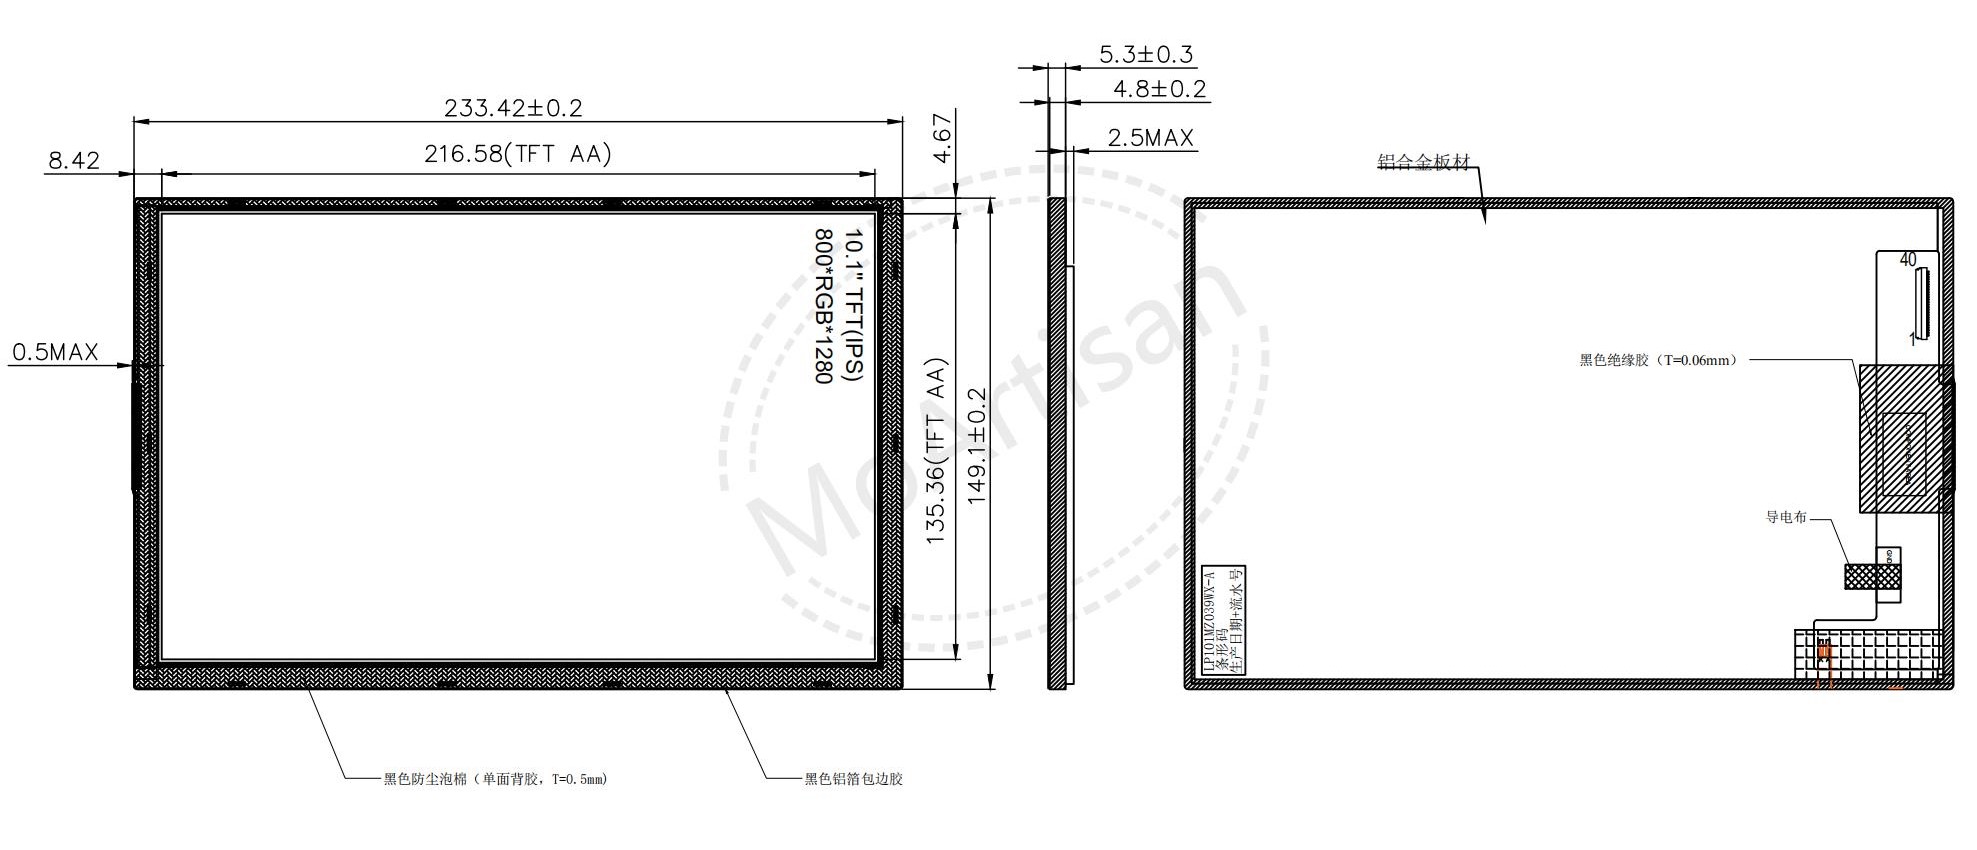 Vertical panel 10.1 inch 800RGB1280 WXGA 1000 nits drawings